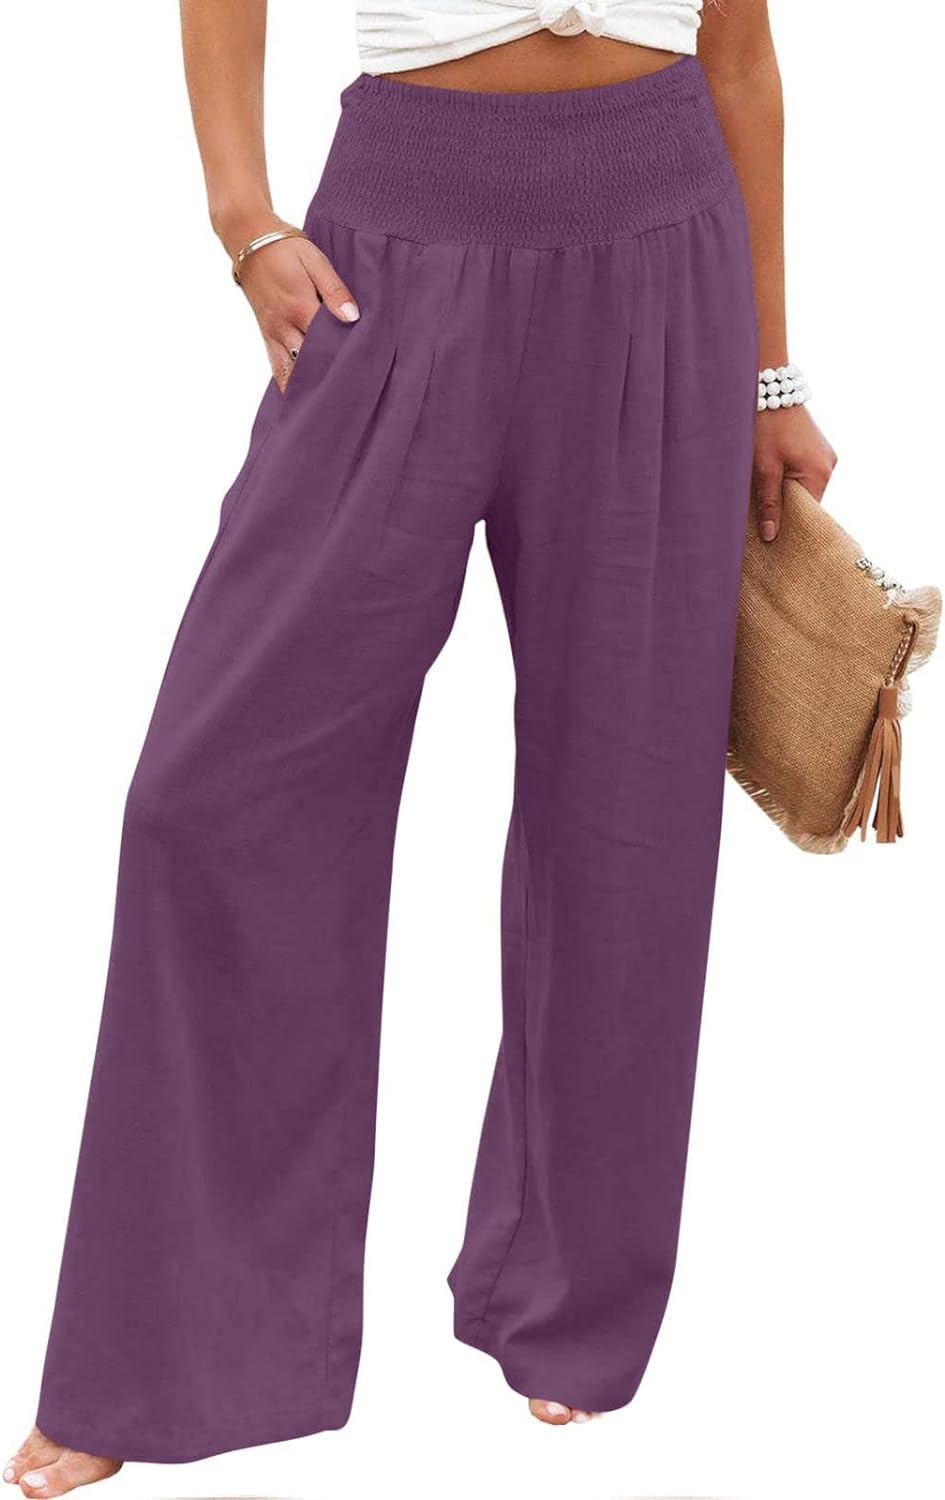 Hvyesh Linen Pants for Women Summer High Waisted Wide Leg Pants Casual Elastic Waist Palazzo Pants Beach Pants with Pockets